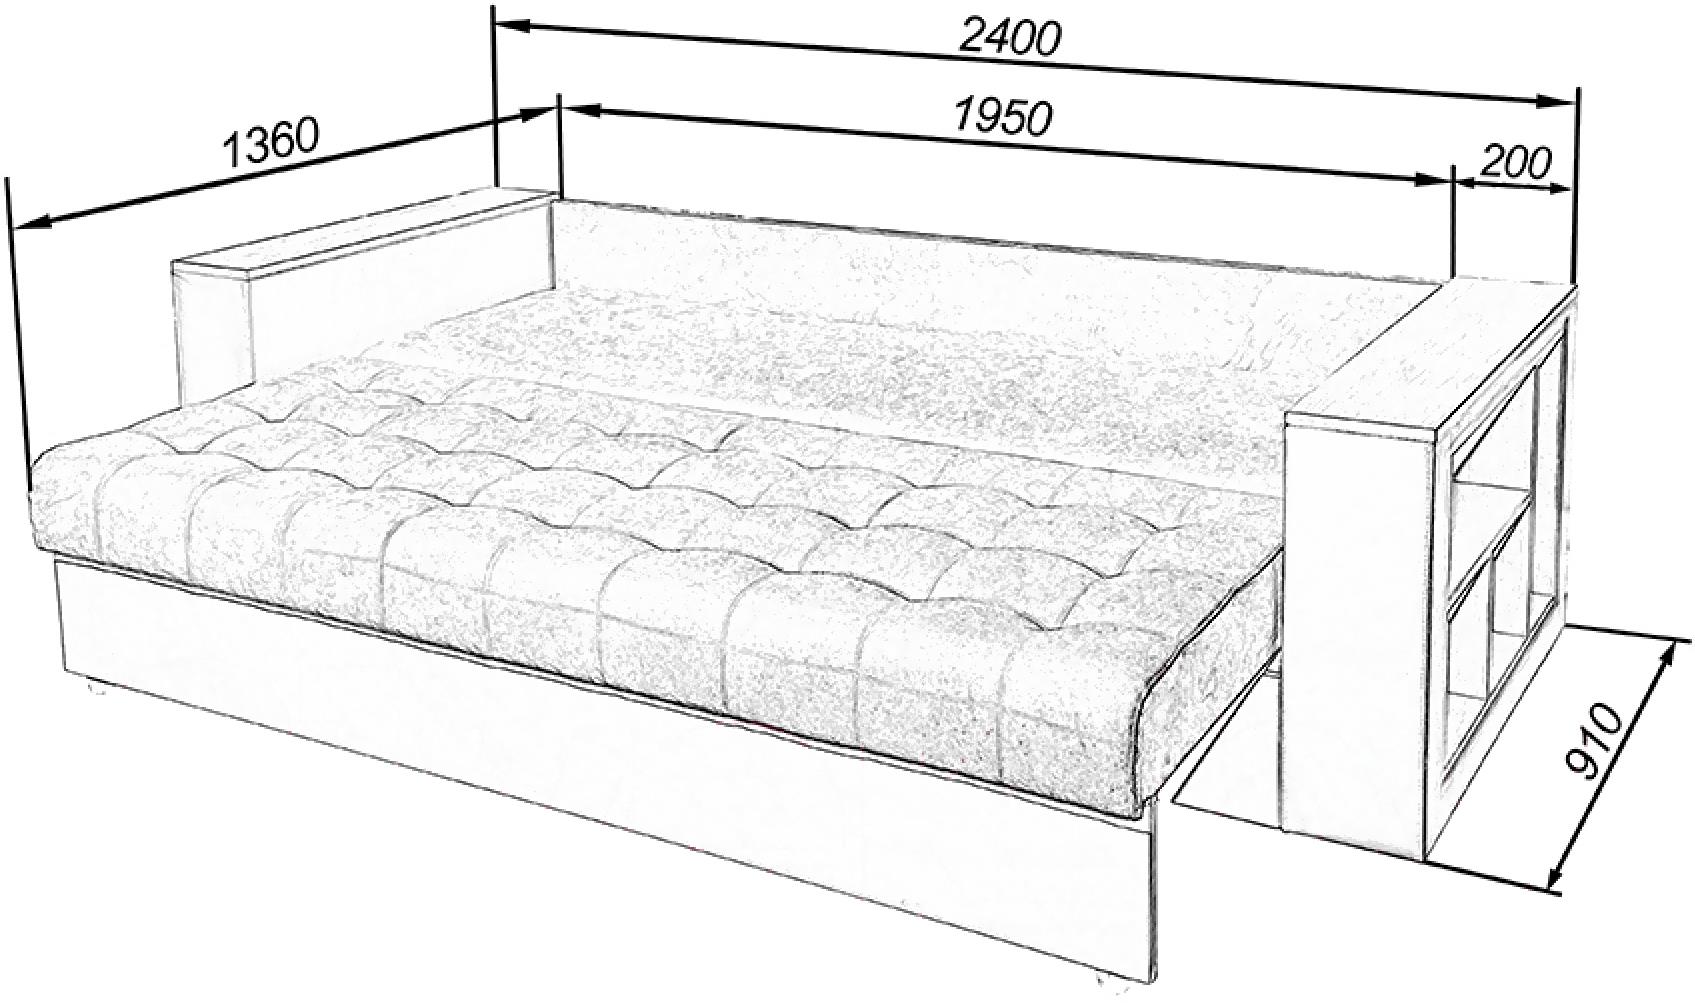 ширина дивана в разложенном виде